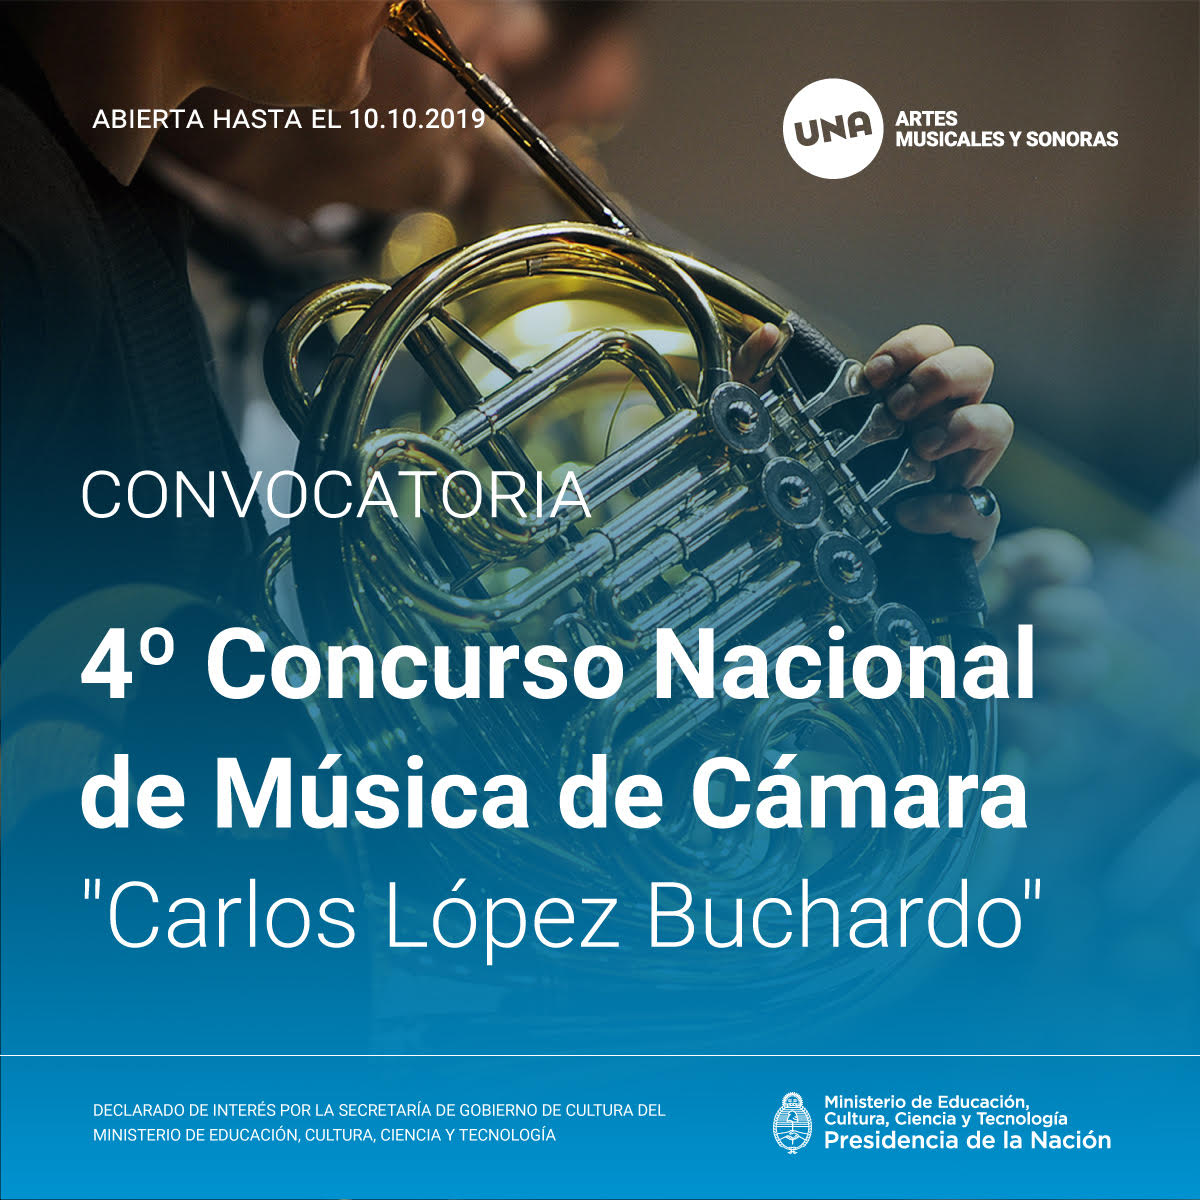 Convocatoria Cuarto Concurso Nacional de Música de Cámara "Carlos López Buchardo"